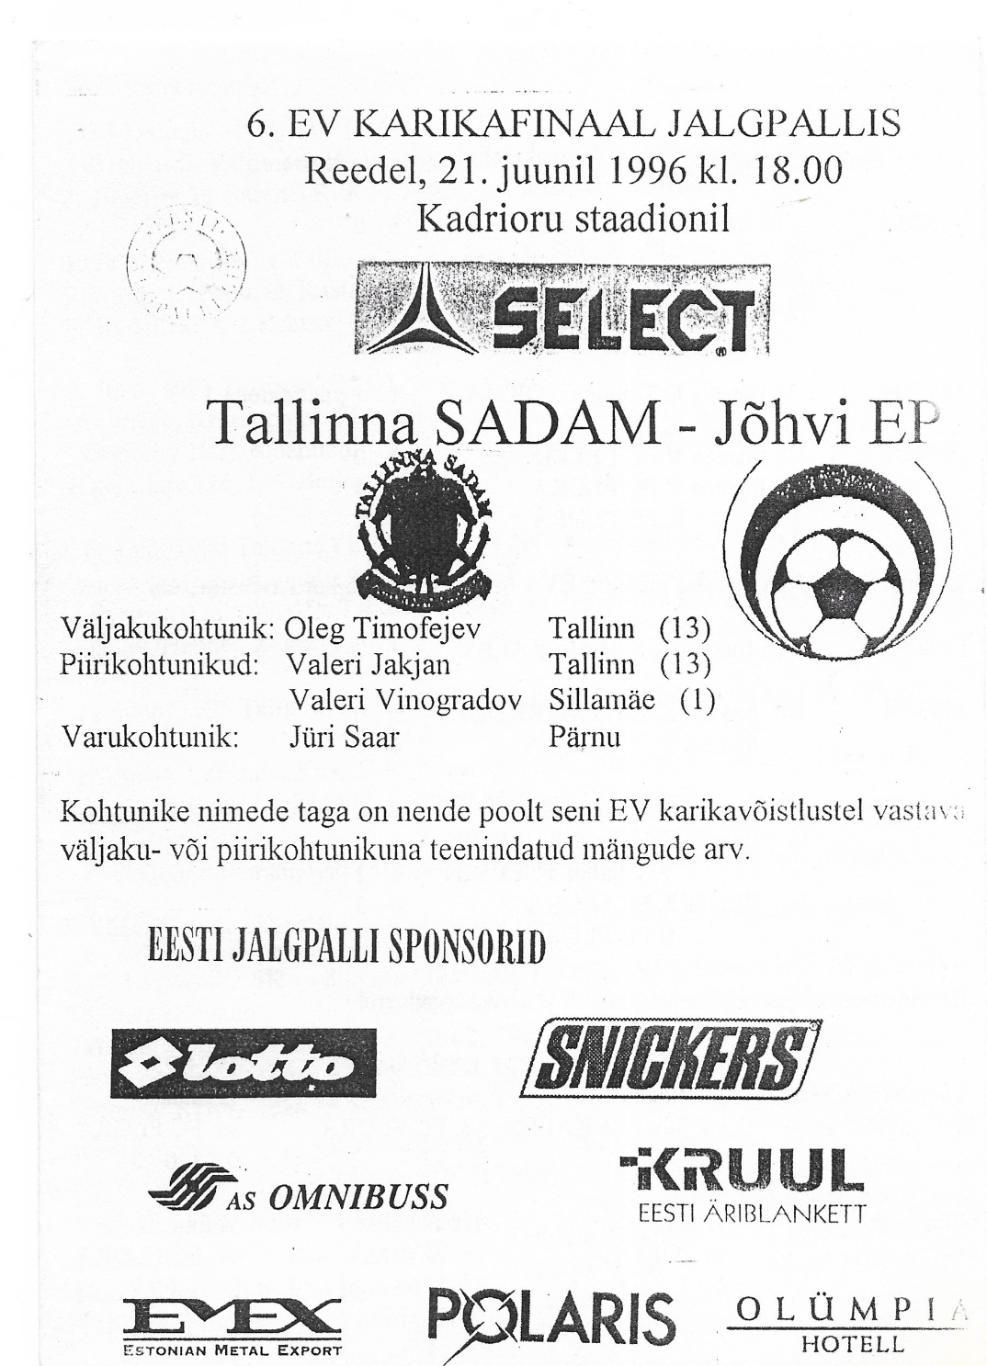 программа. _Sadam_Tallinn v EP_Johvi_21. 06.1996_Karikafinaal_Jalgpal lis_финал_